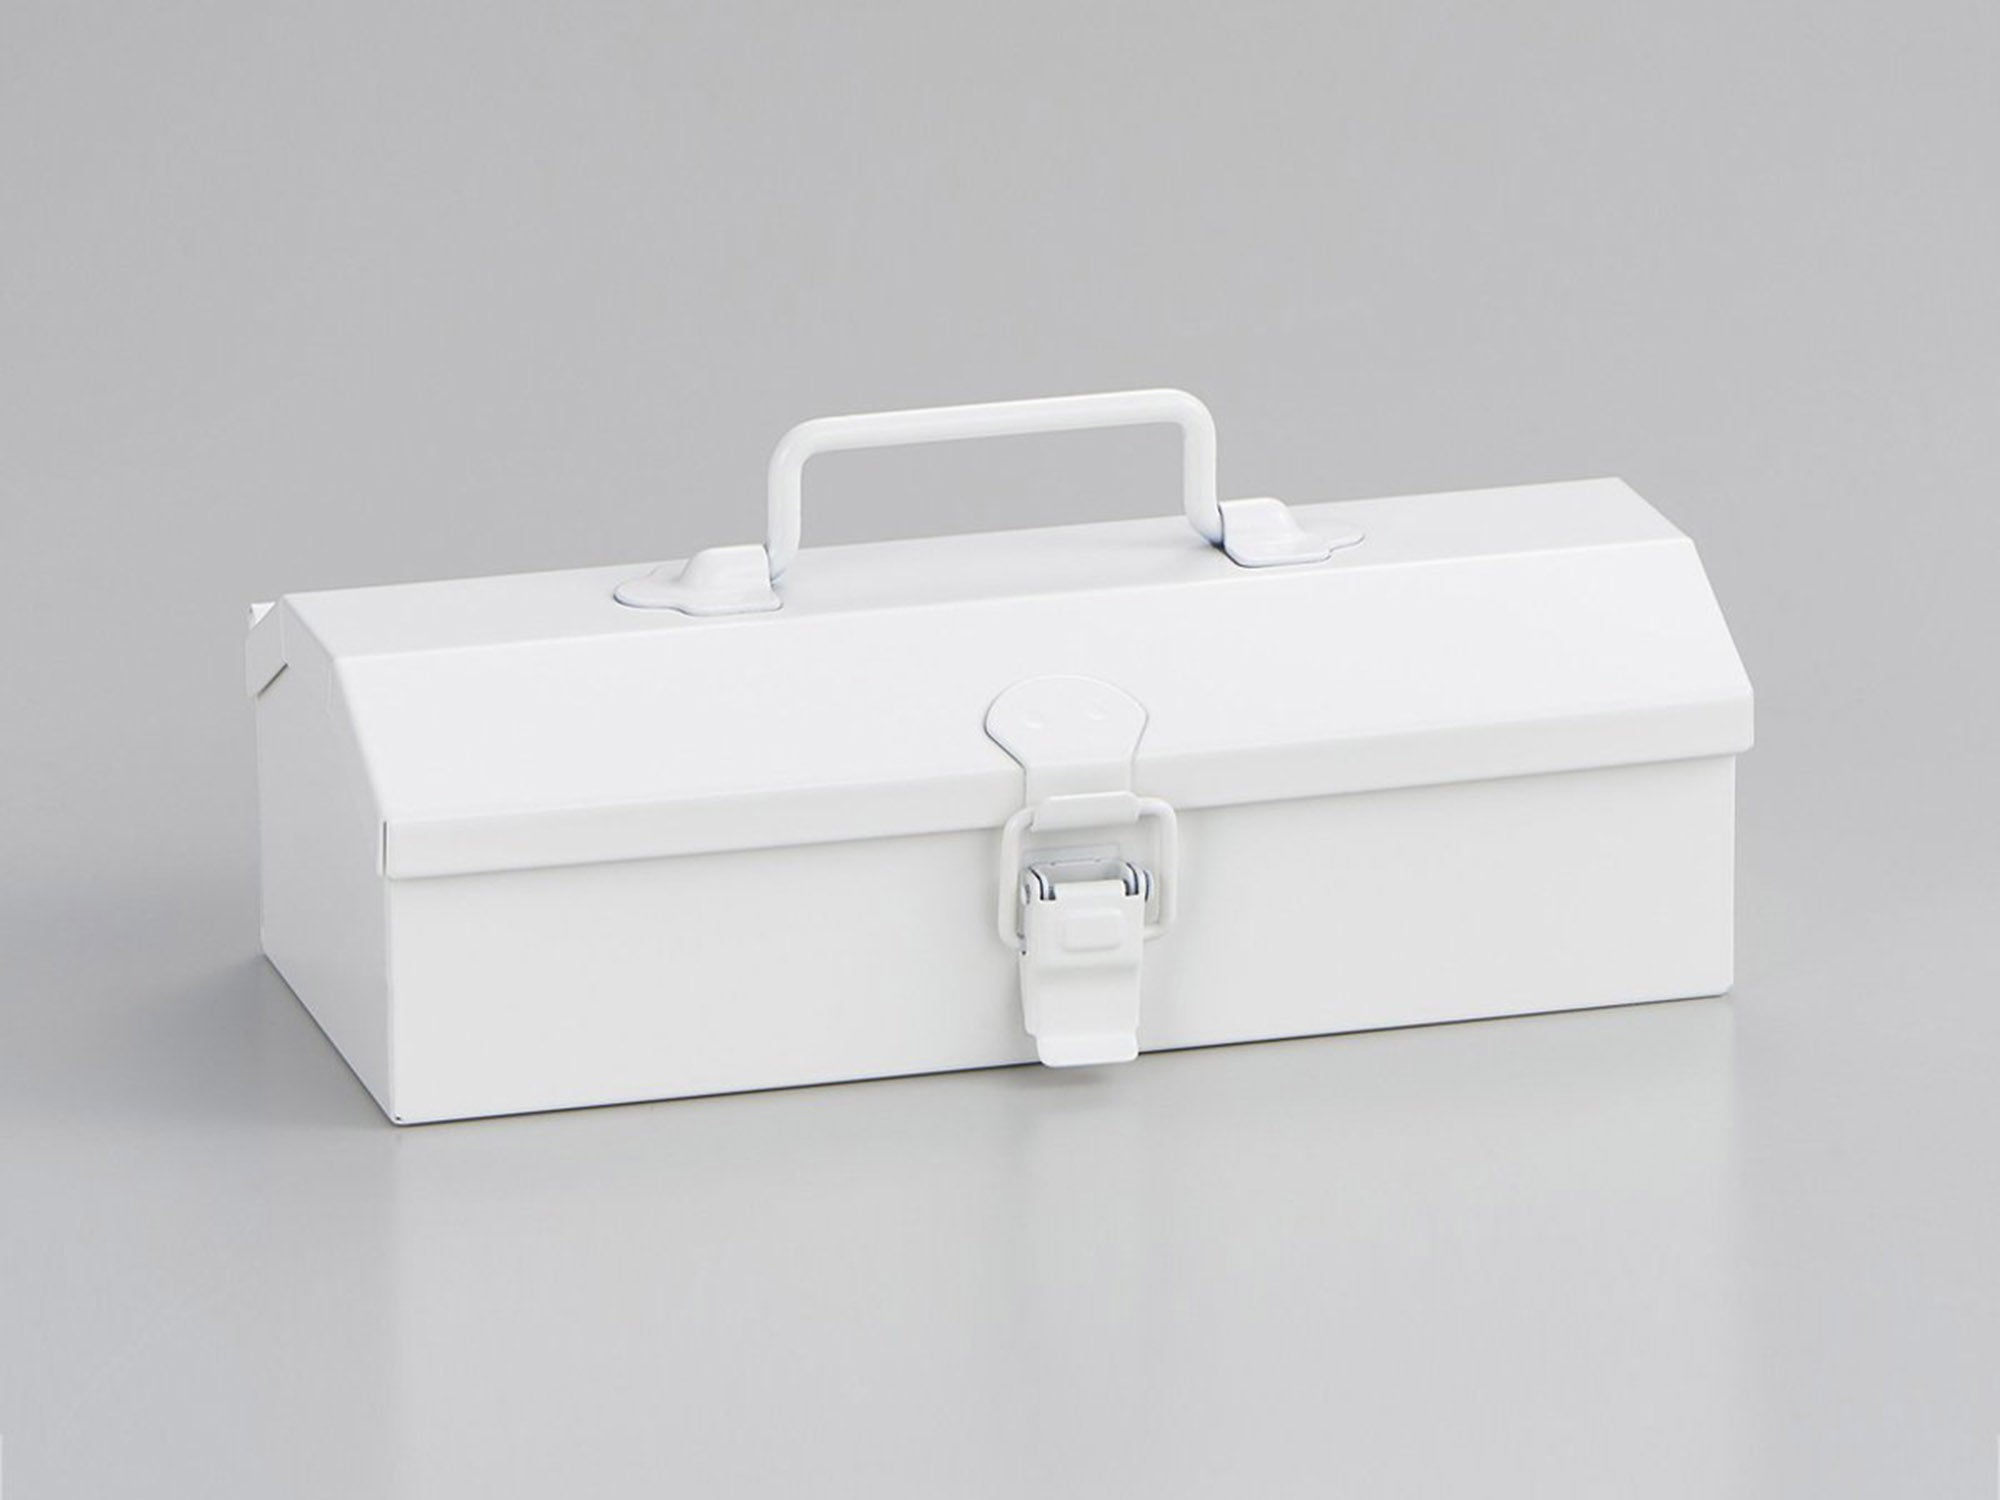 Toyo Steel Mini Box Y-20 White